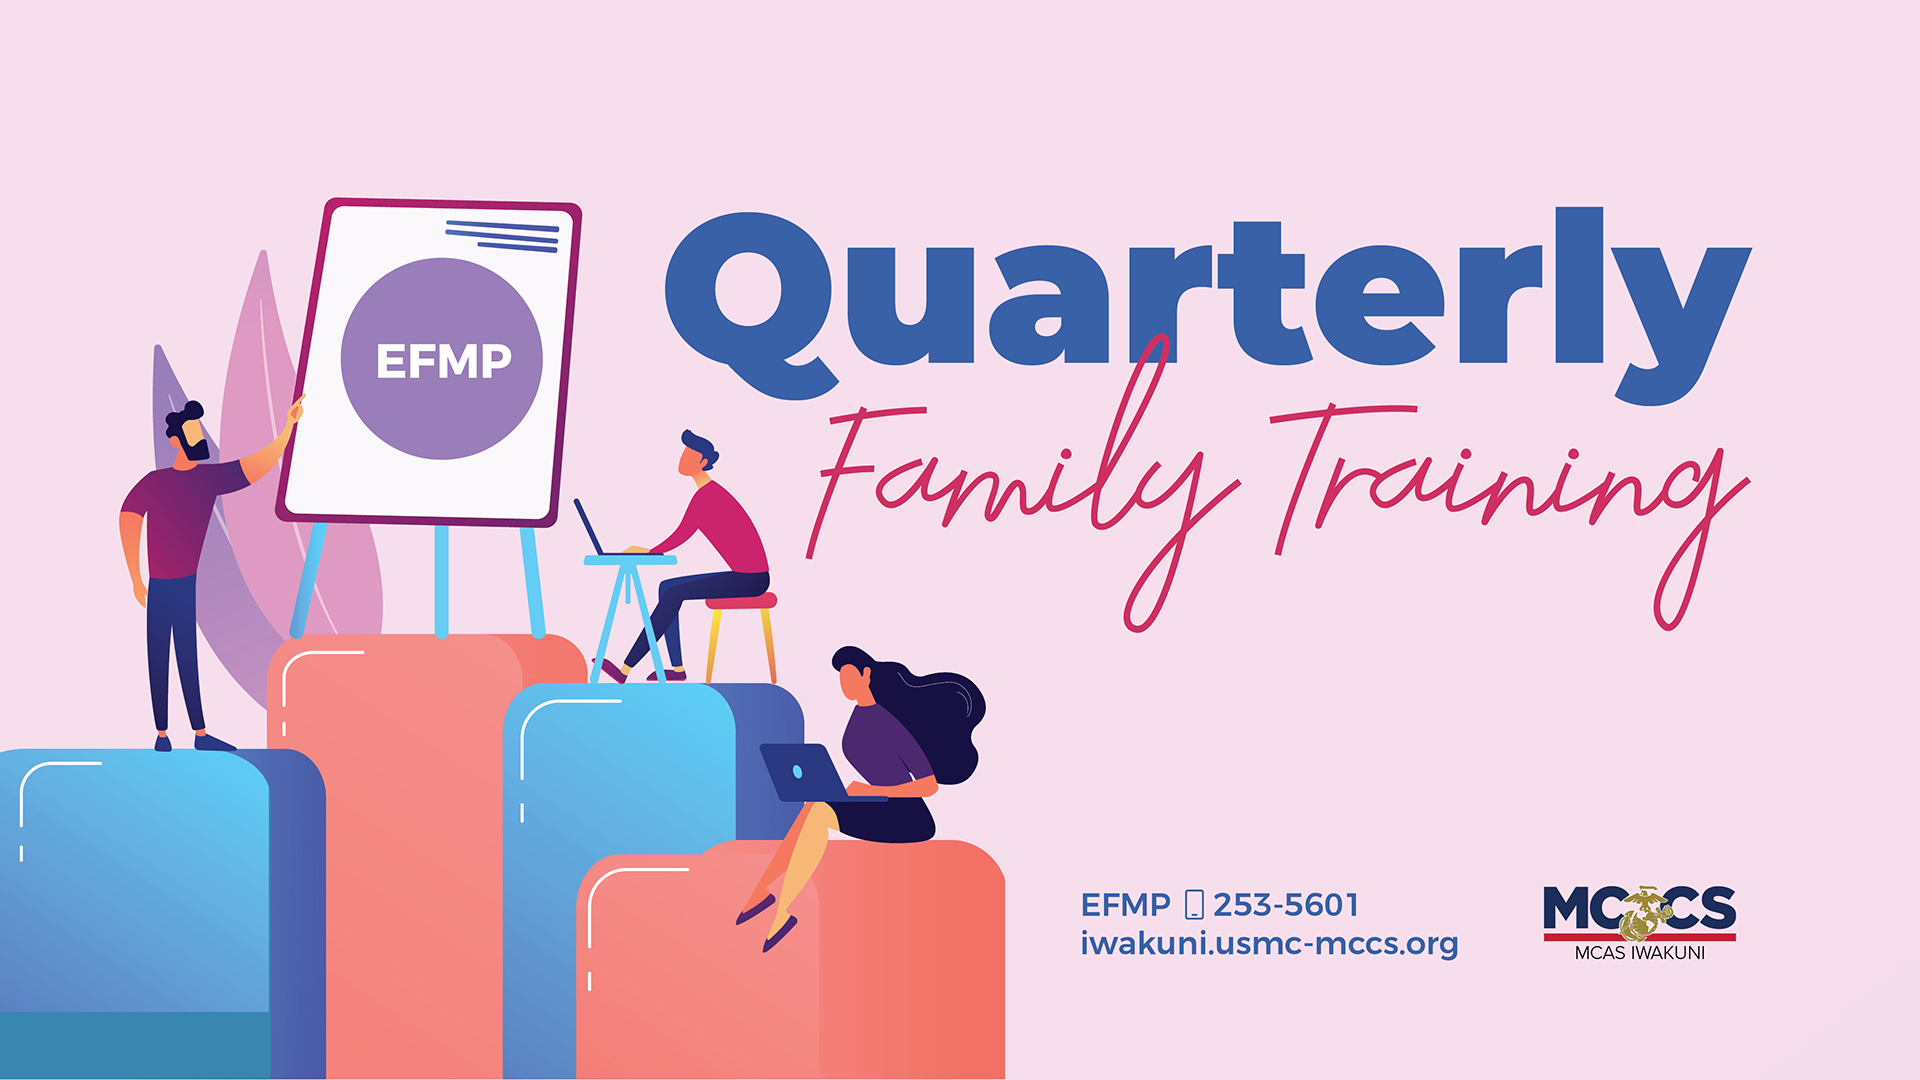 EFMP Quarterly Family Training (Morning Session)